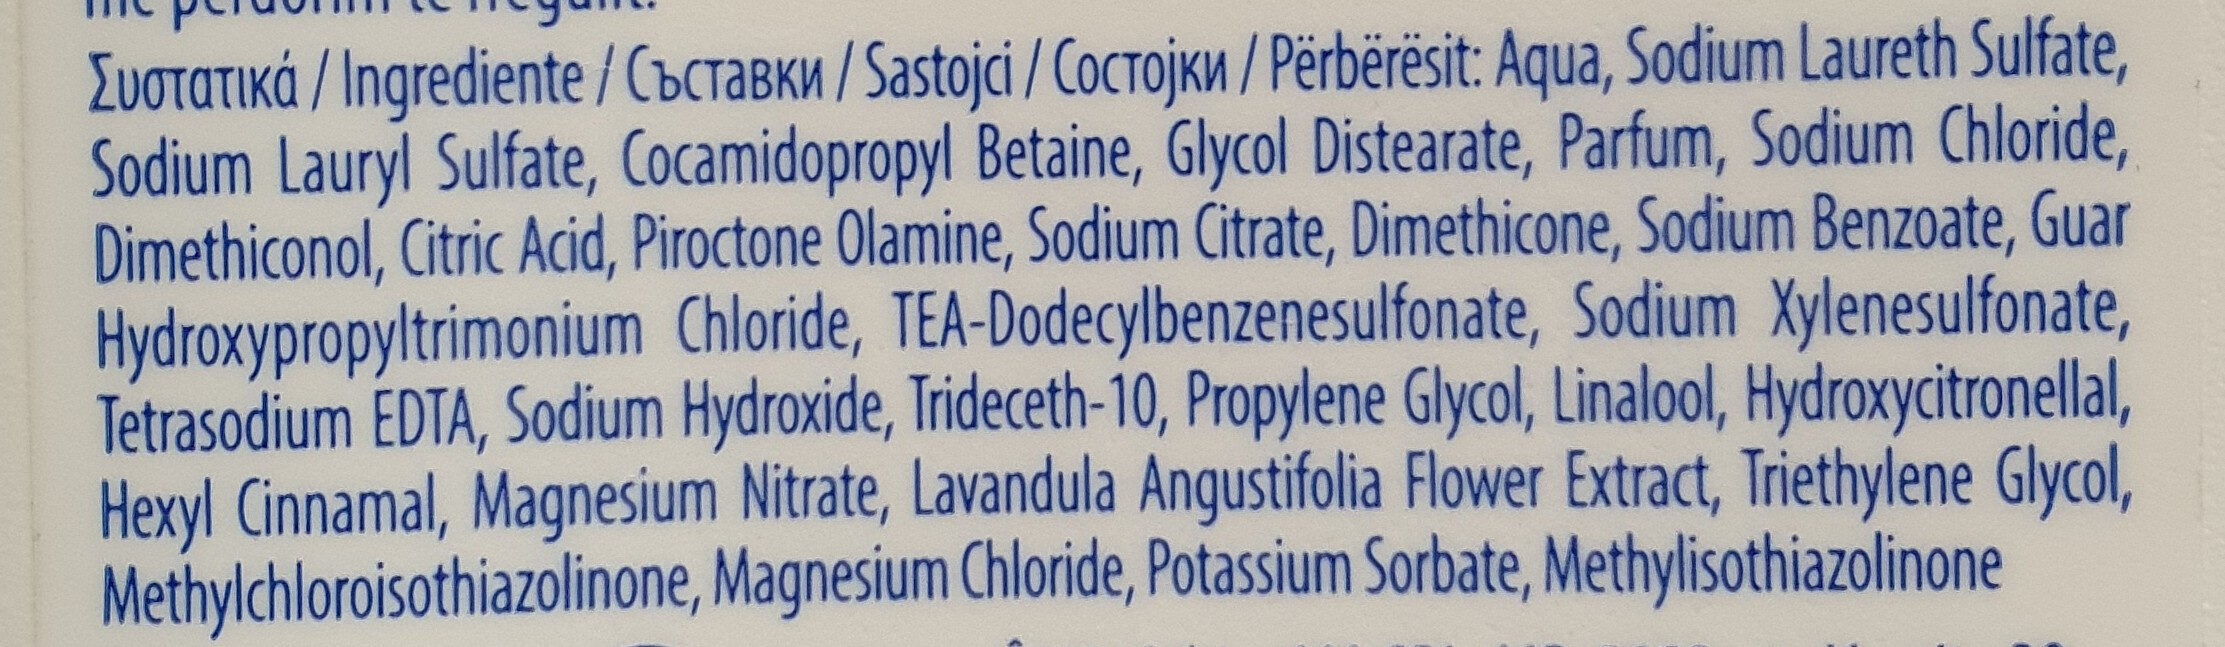 ANTI-DANDRUFF SHAMPOO - Ingredientes - en